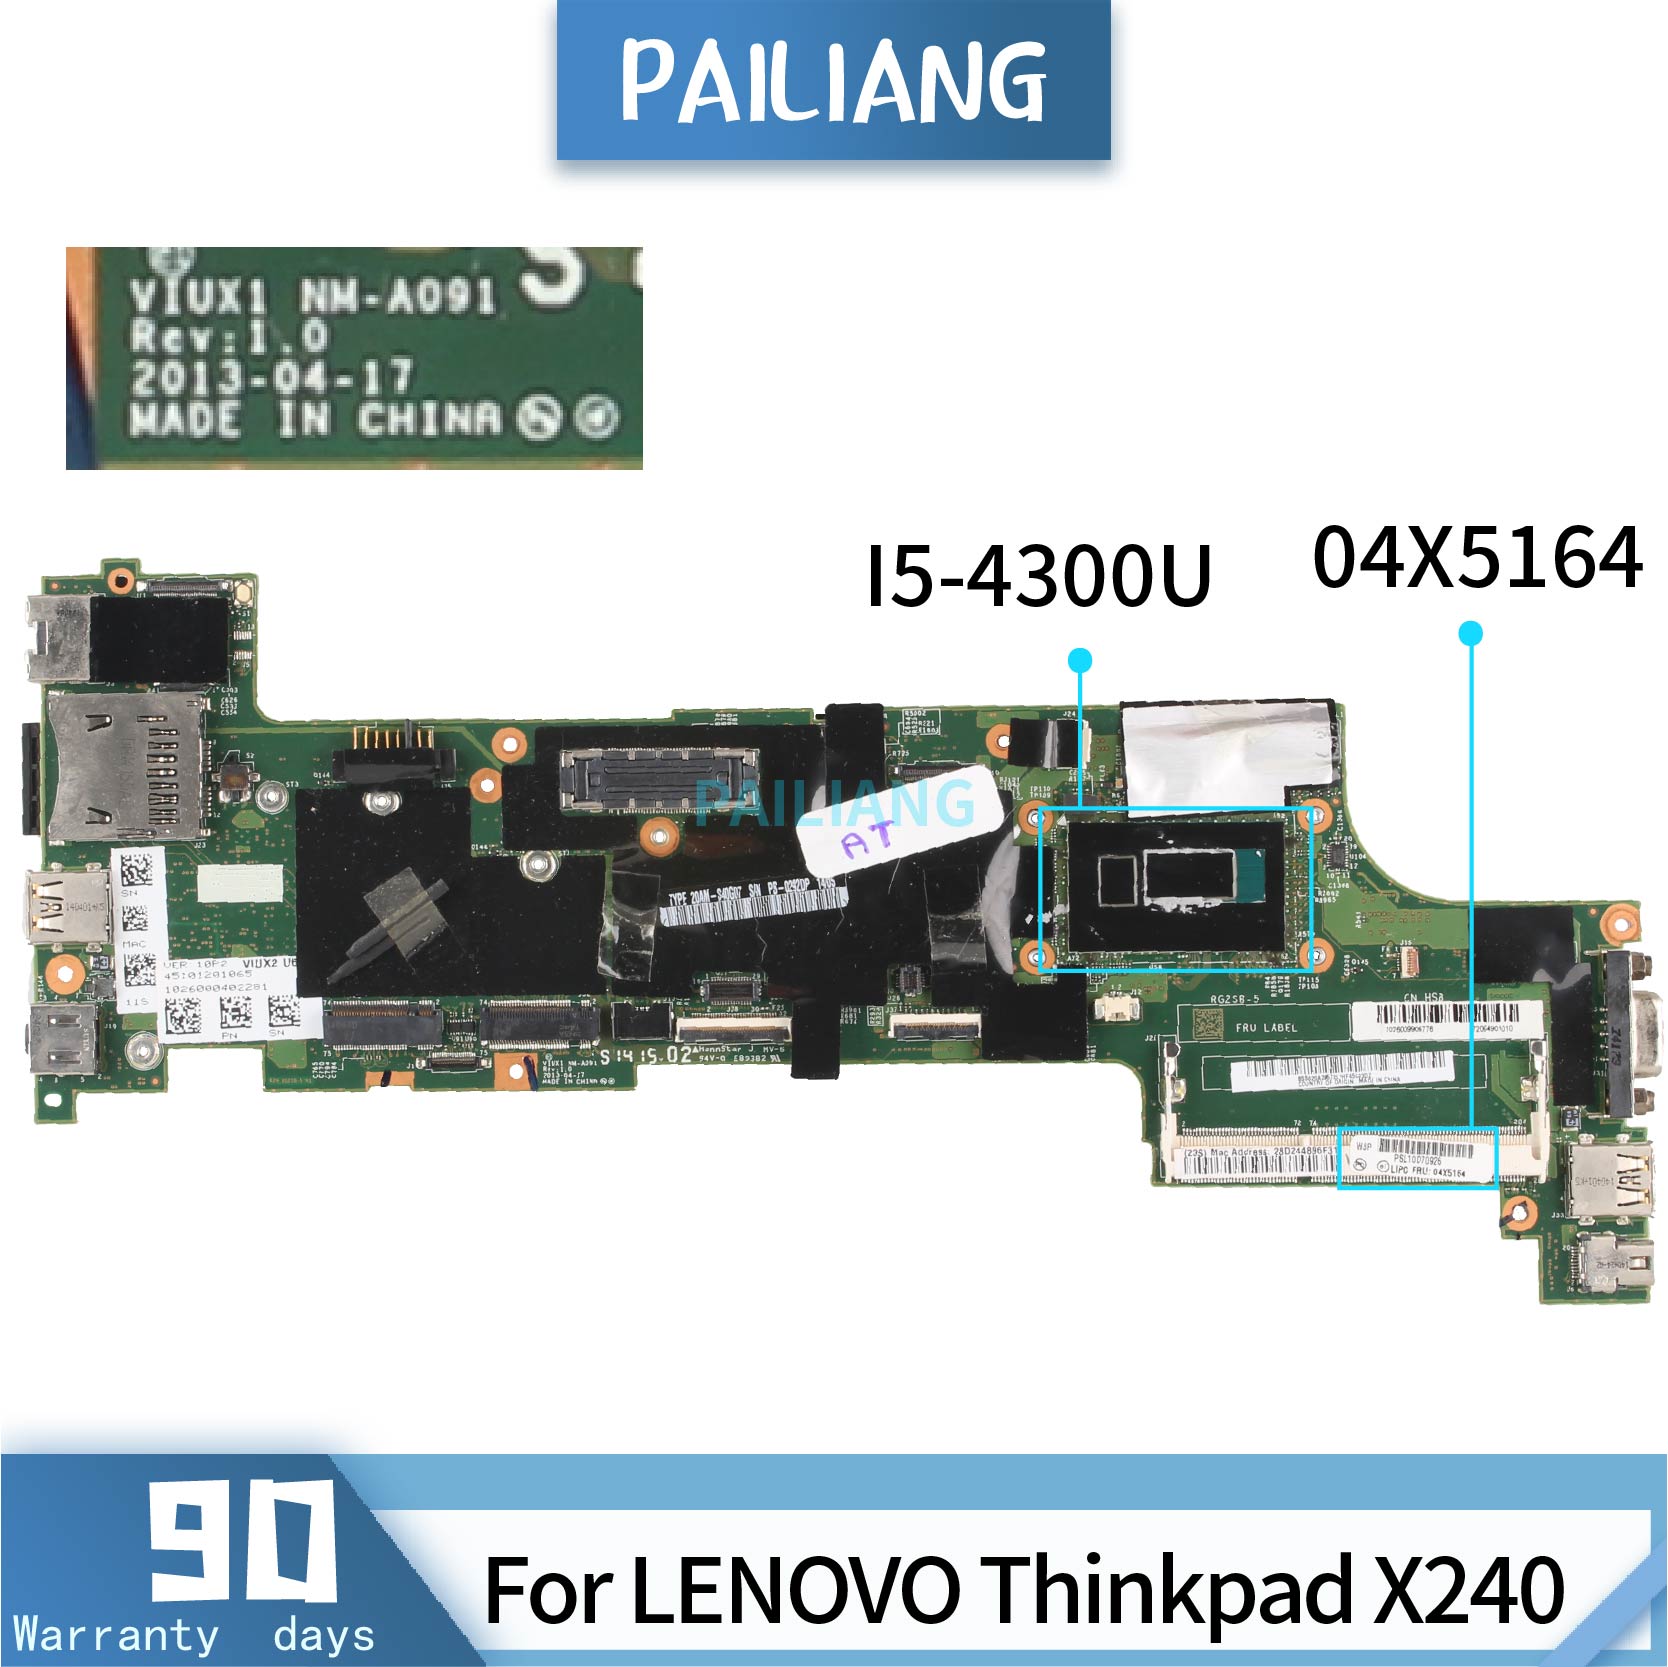 LENOVO Thinkpad X240 Ʈ  04X5164 VIUX1 NM-A091 I5-4300U Ʈ κ, DDR3 ׽Ʈ Ϸ